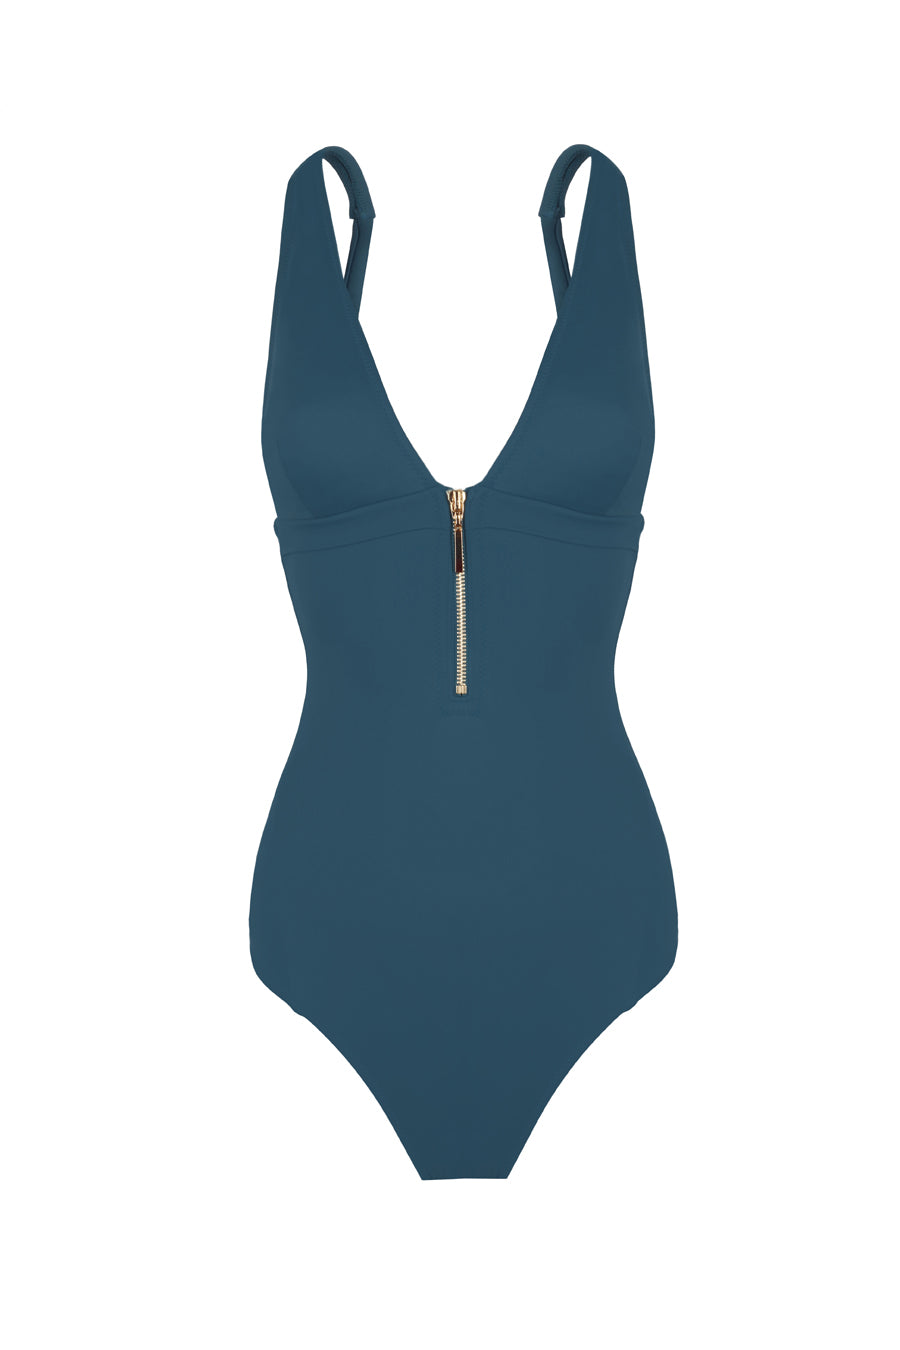 Noelle Green Swimsuit